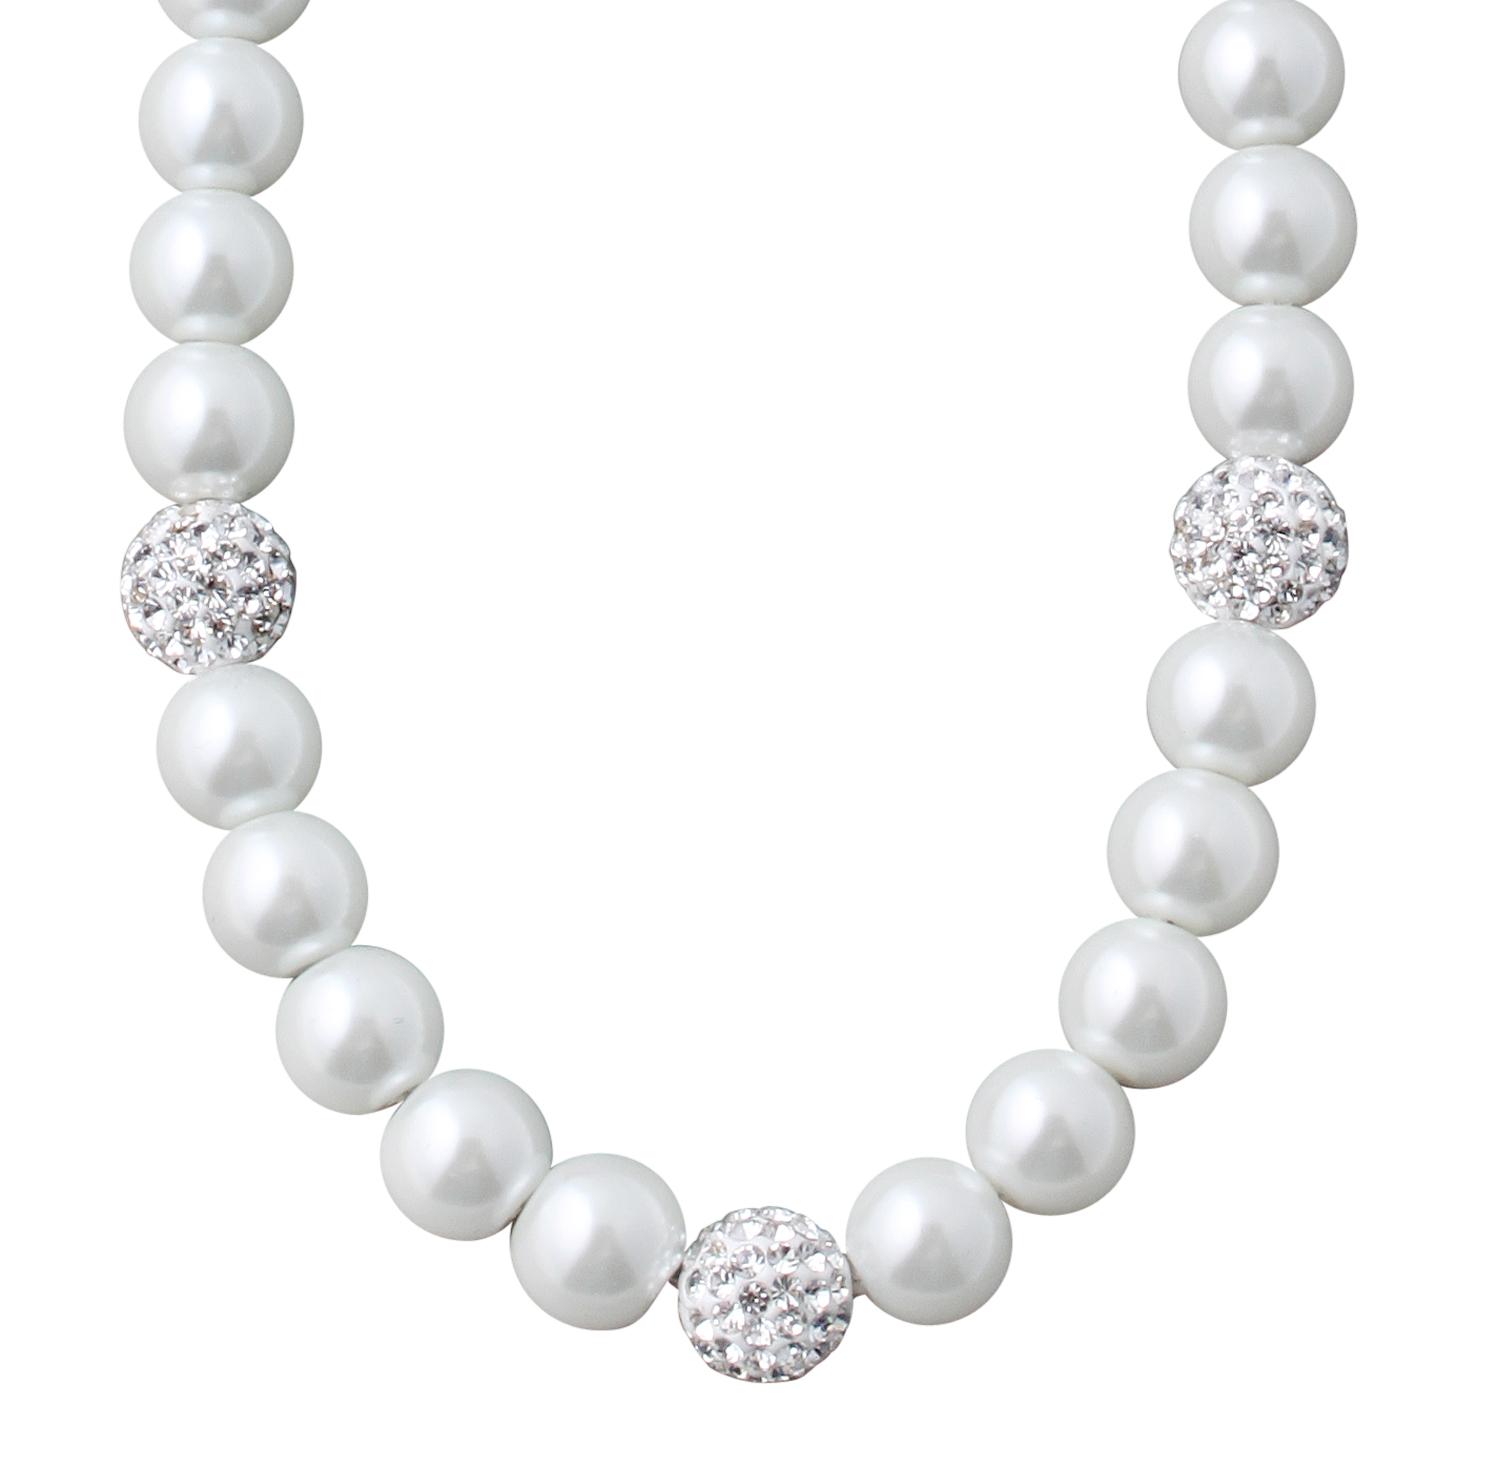 Necklace - Rhinestone Beads